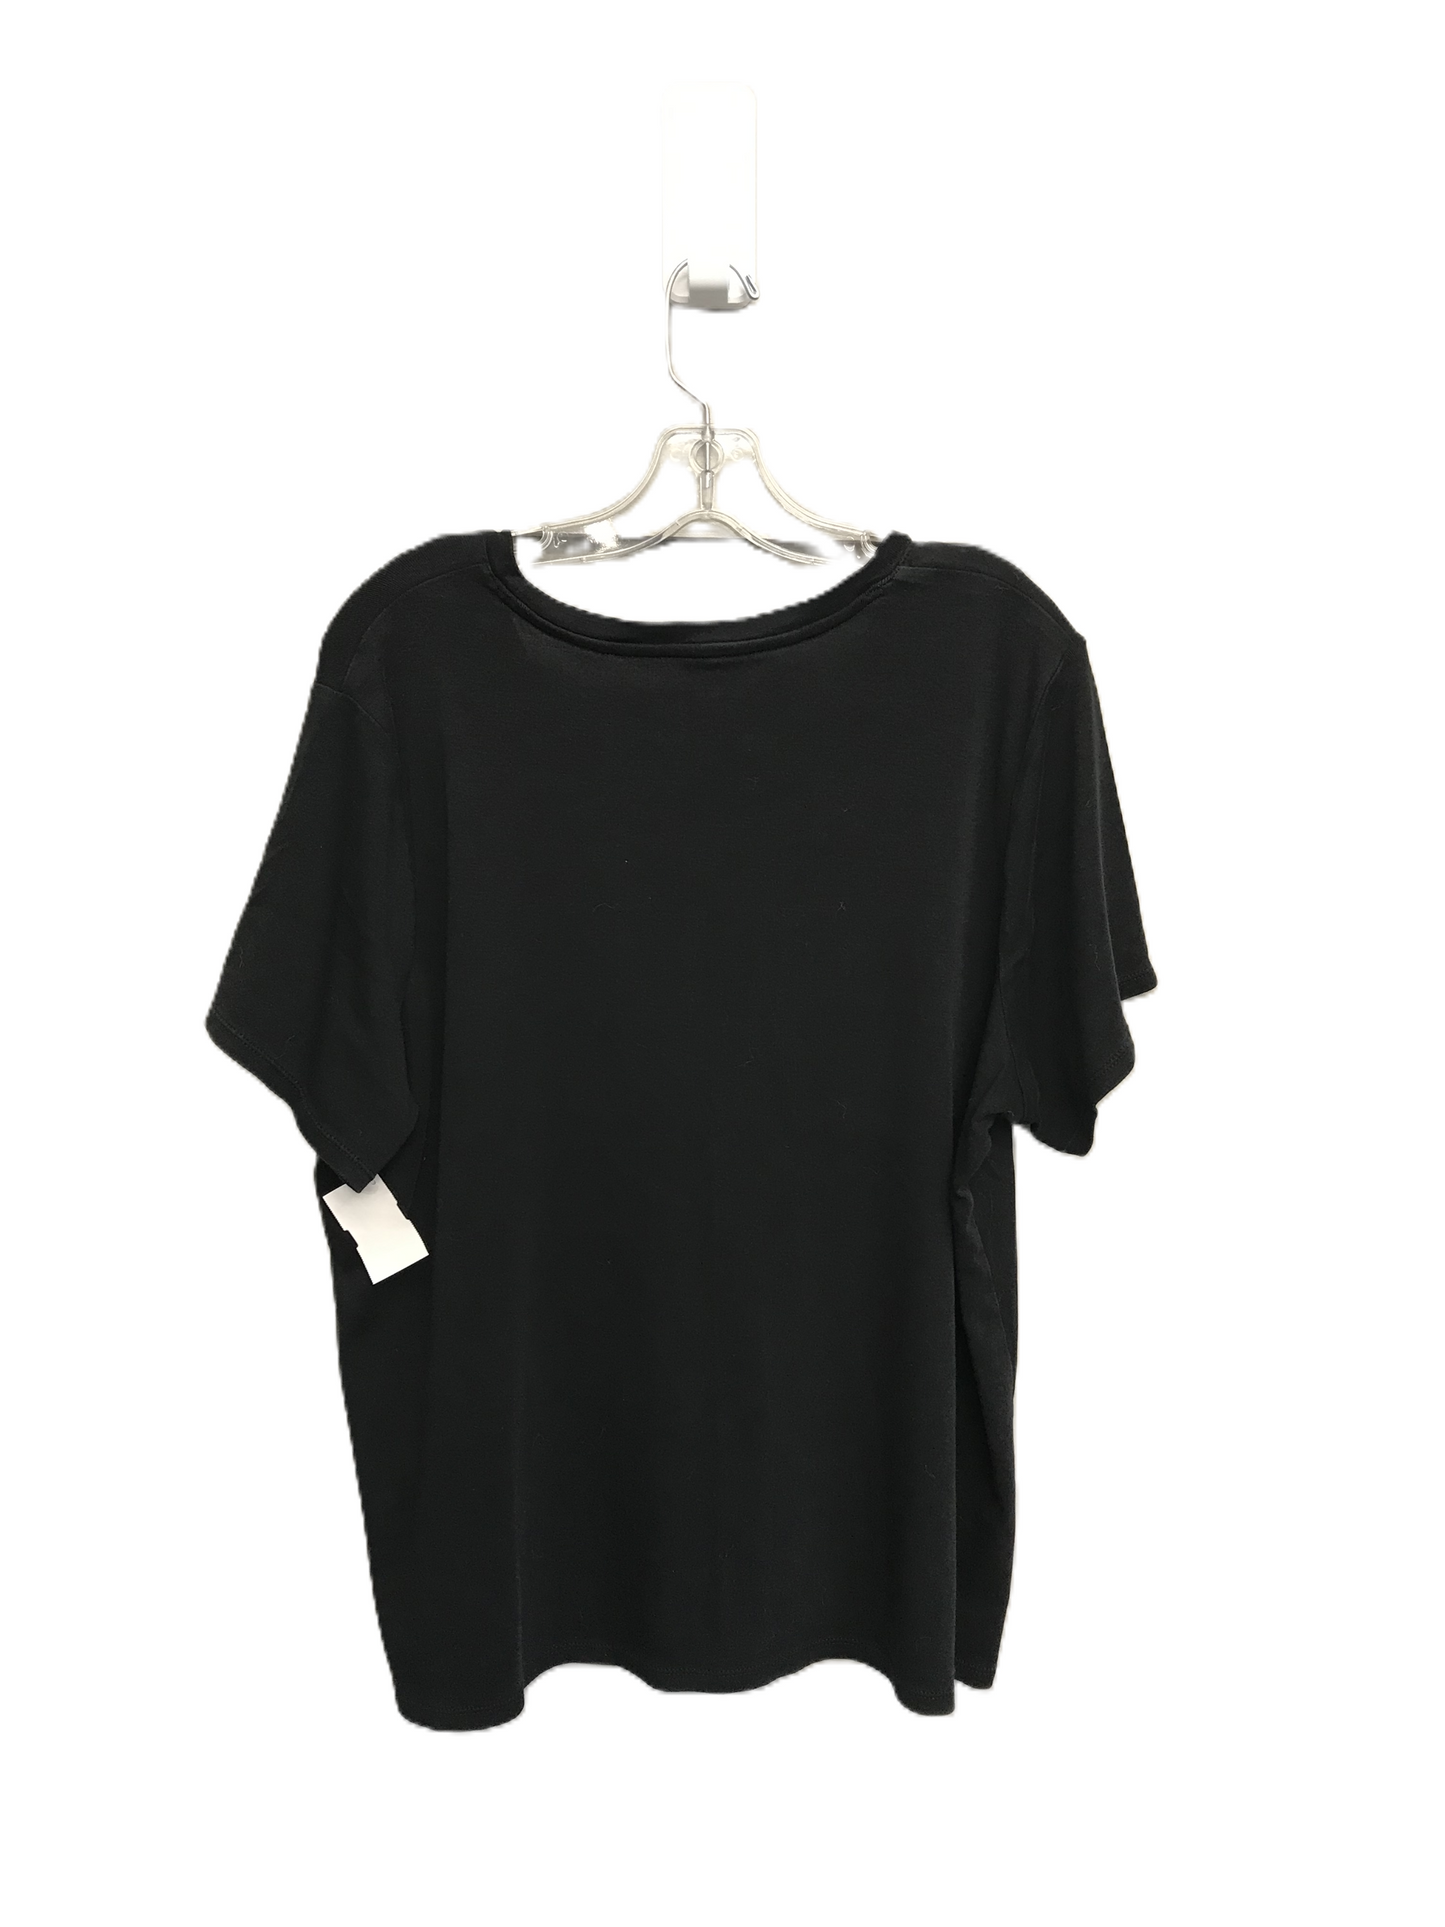 Black Top Short Sleeve Basic By J. Jill, Size: 2x